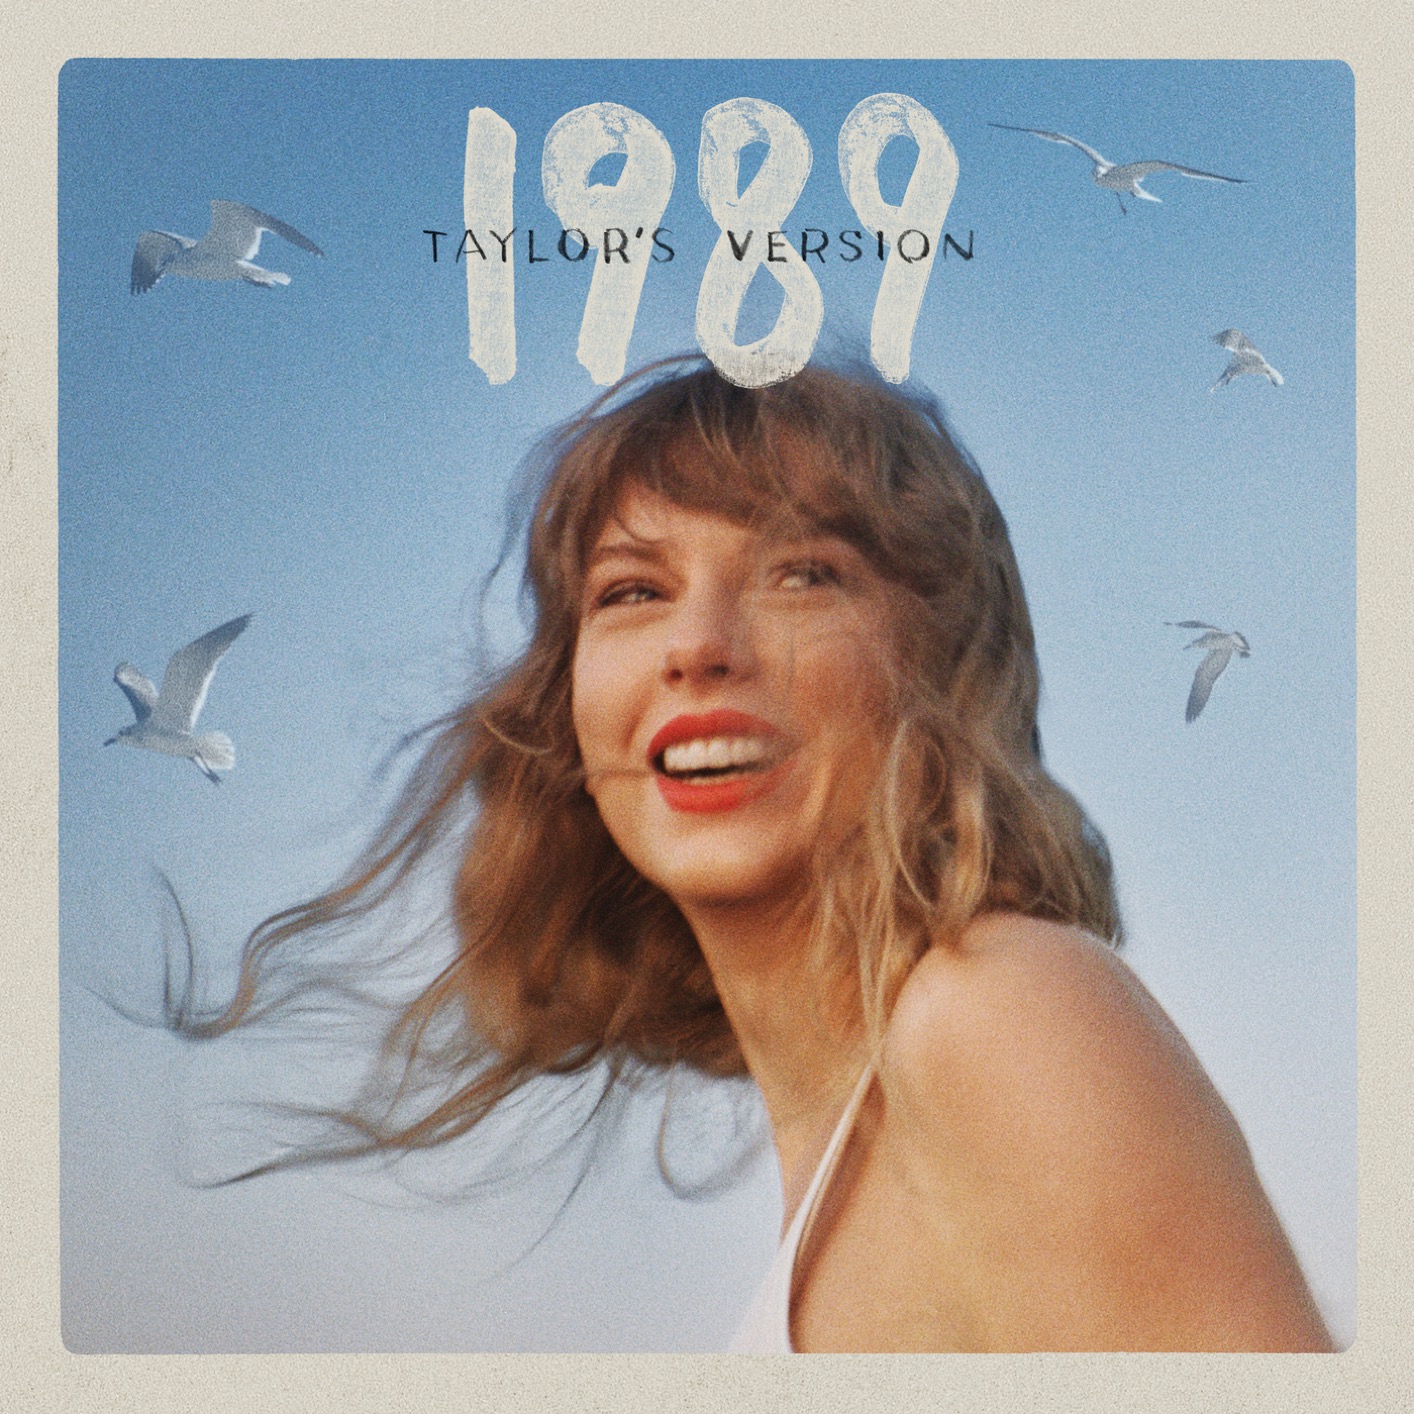 Taylor Swift - 1989 (Taylor's Version) - 音兔无损- 高品质无损音乐下载